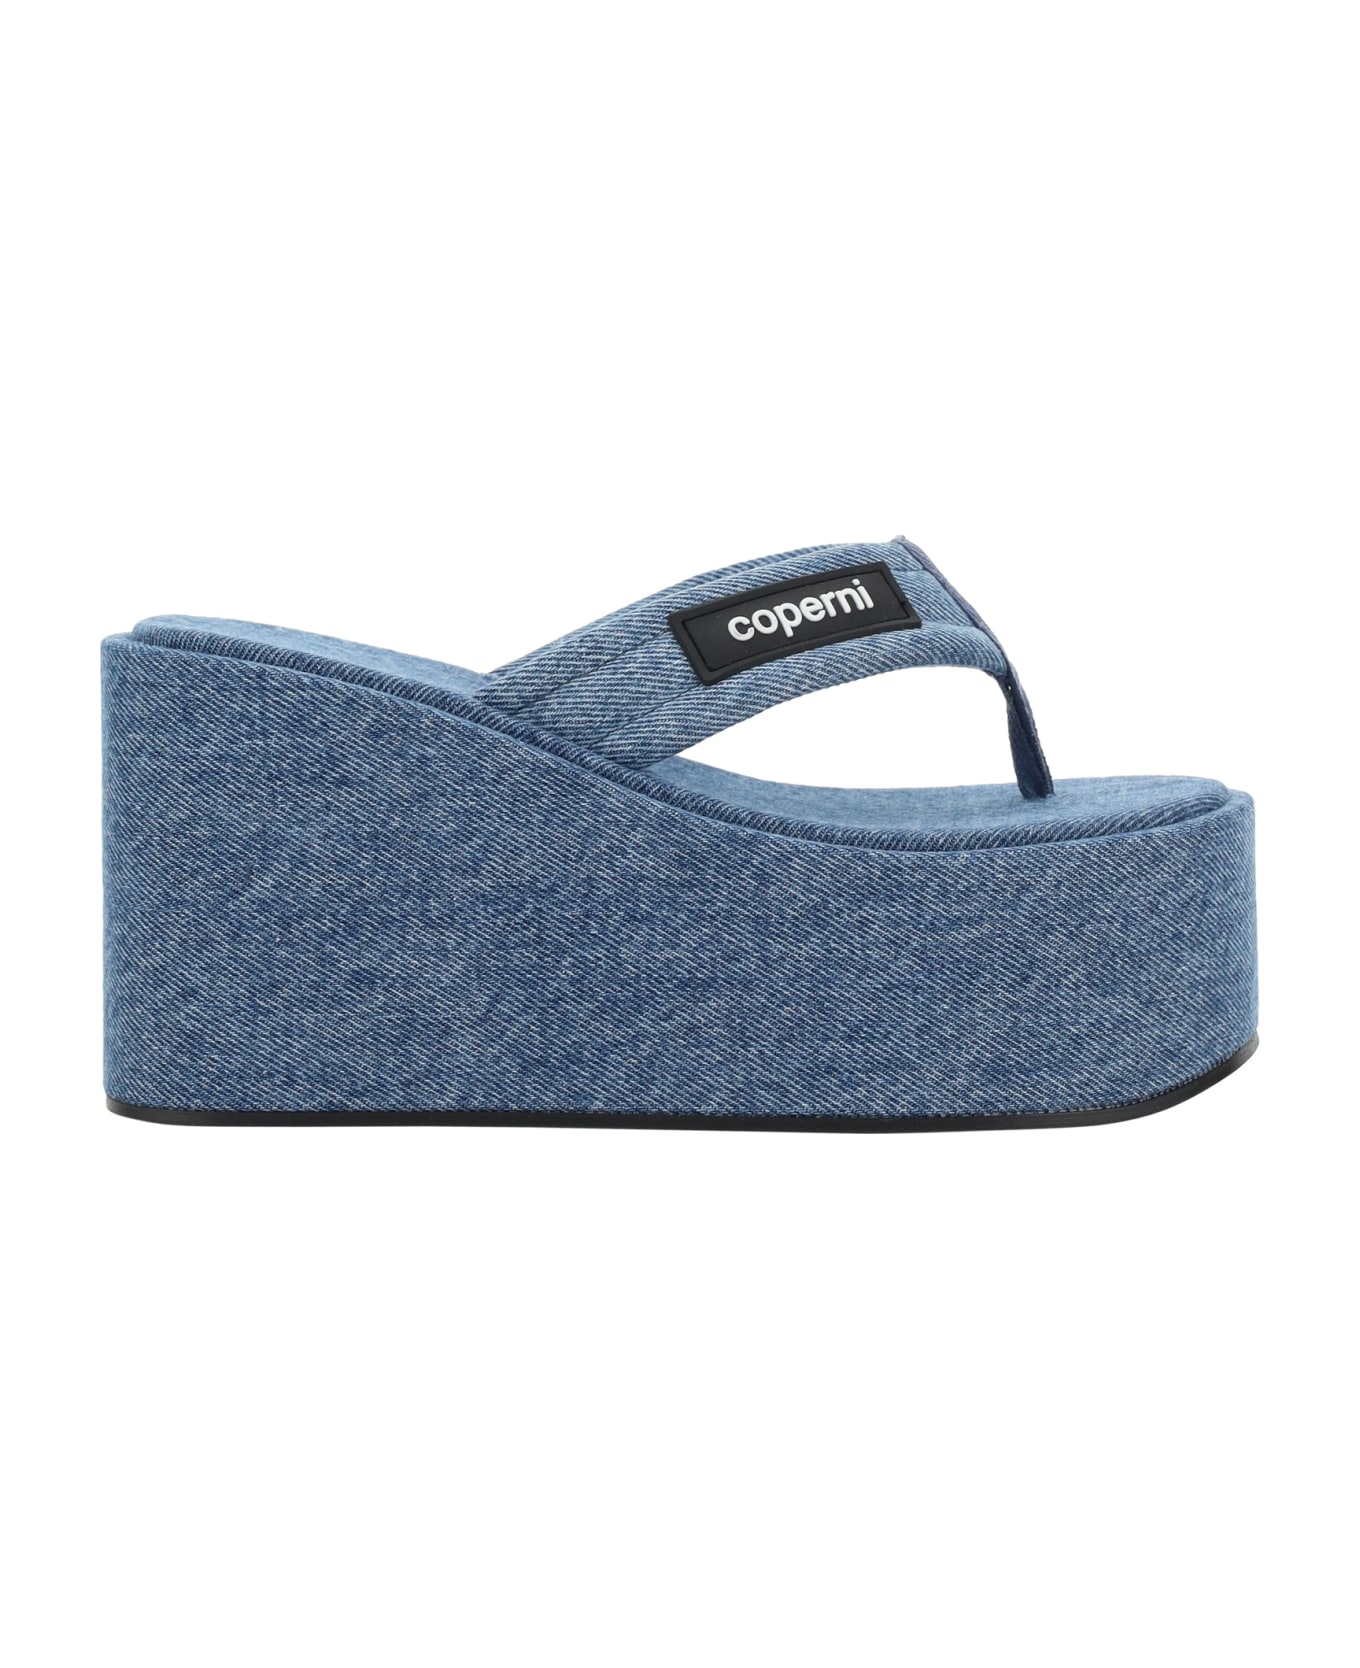 Coperni Wedge Sandals - Washed Blue